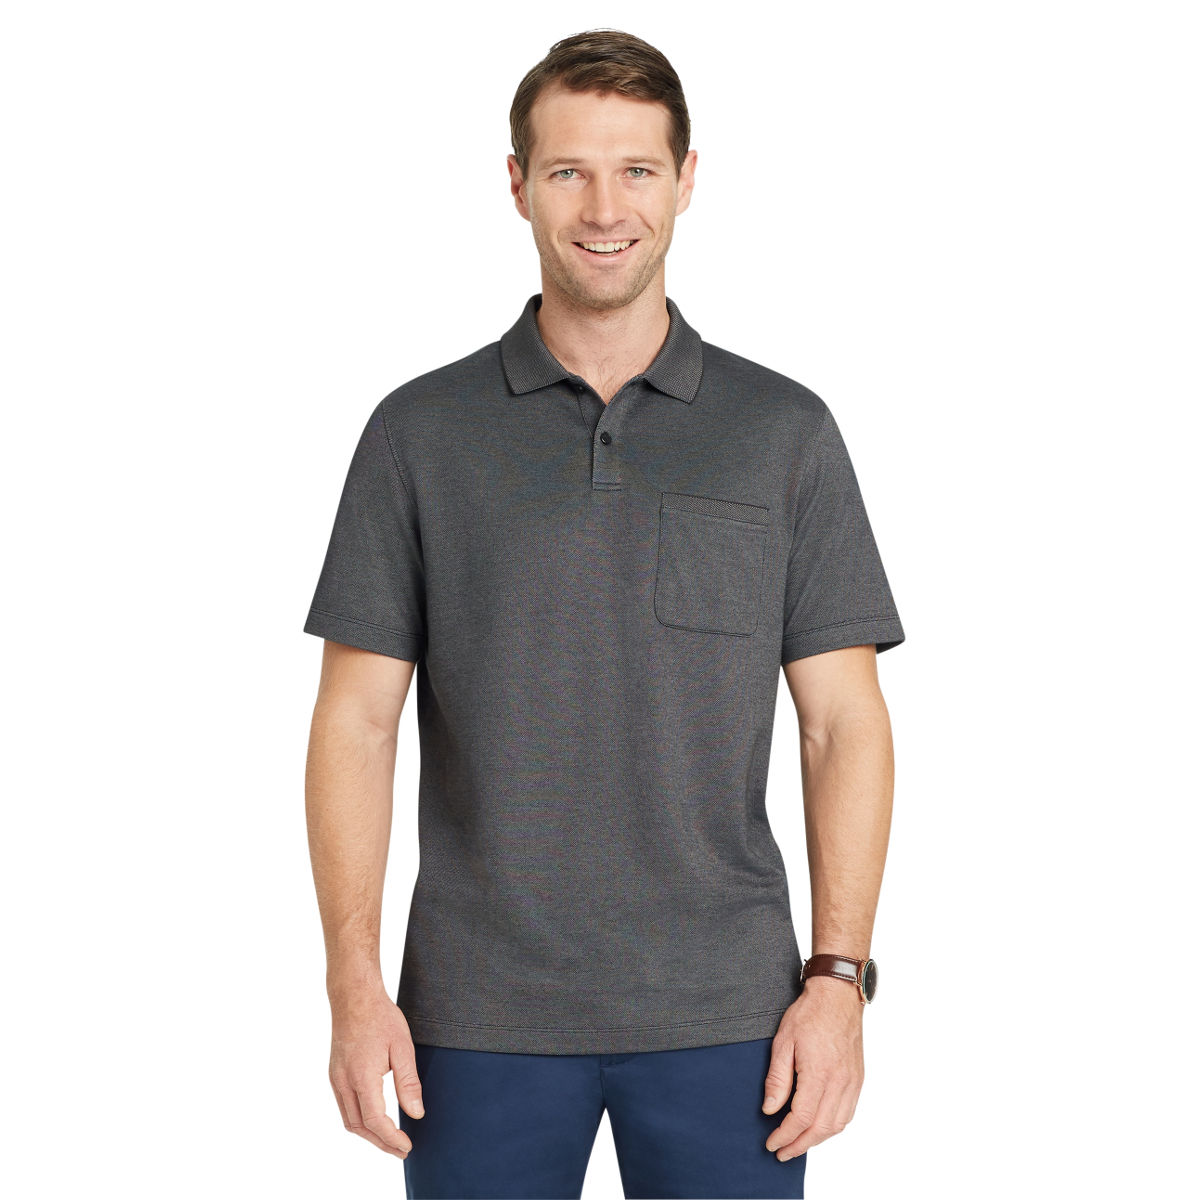 Van Heusen Men's Flex Solid Tip Short-Sleeve Polo Shirt - Black, XL